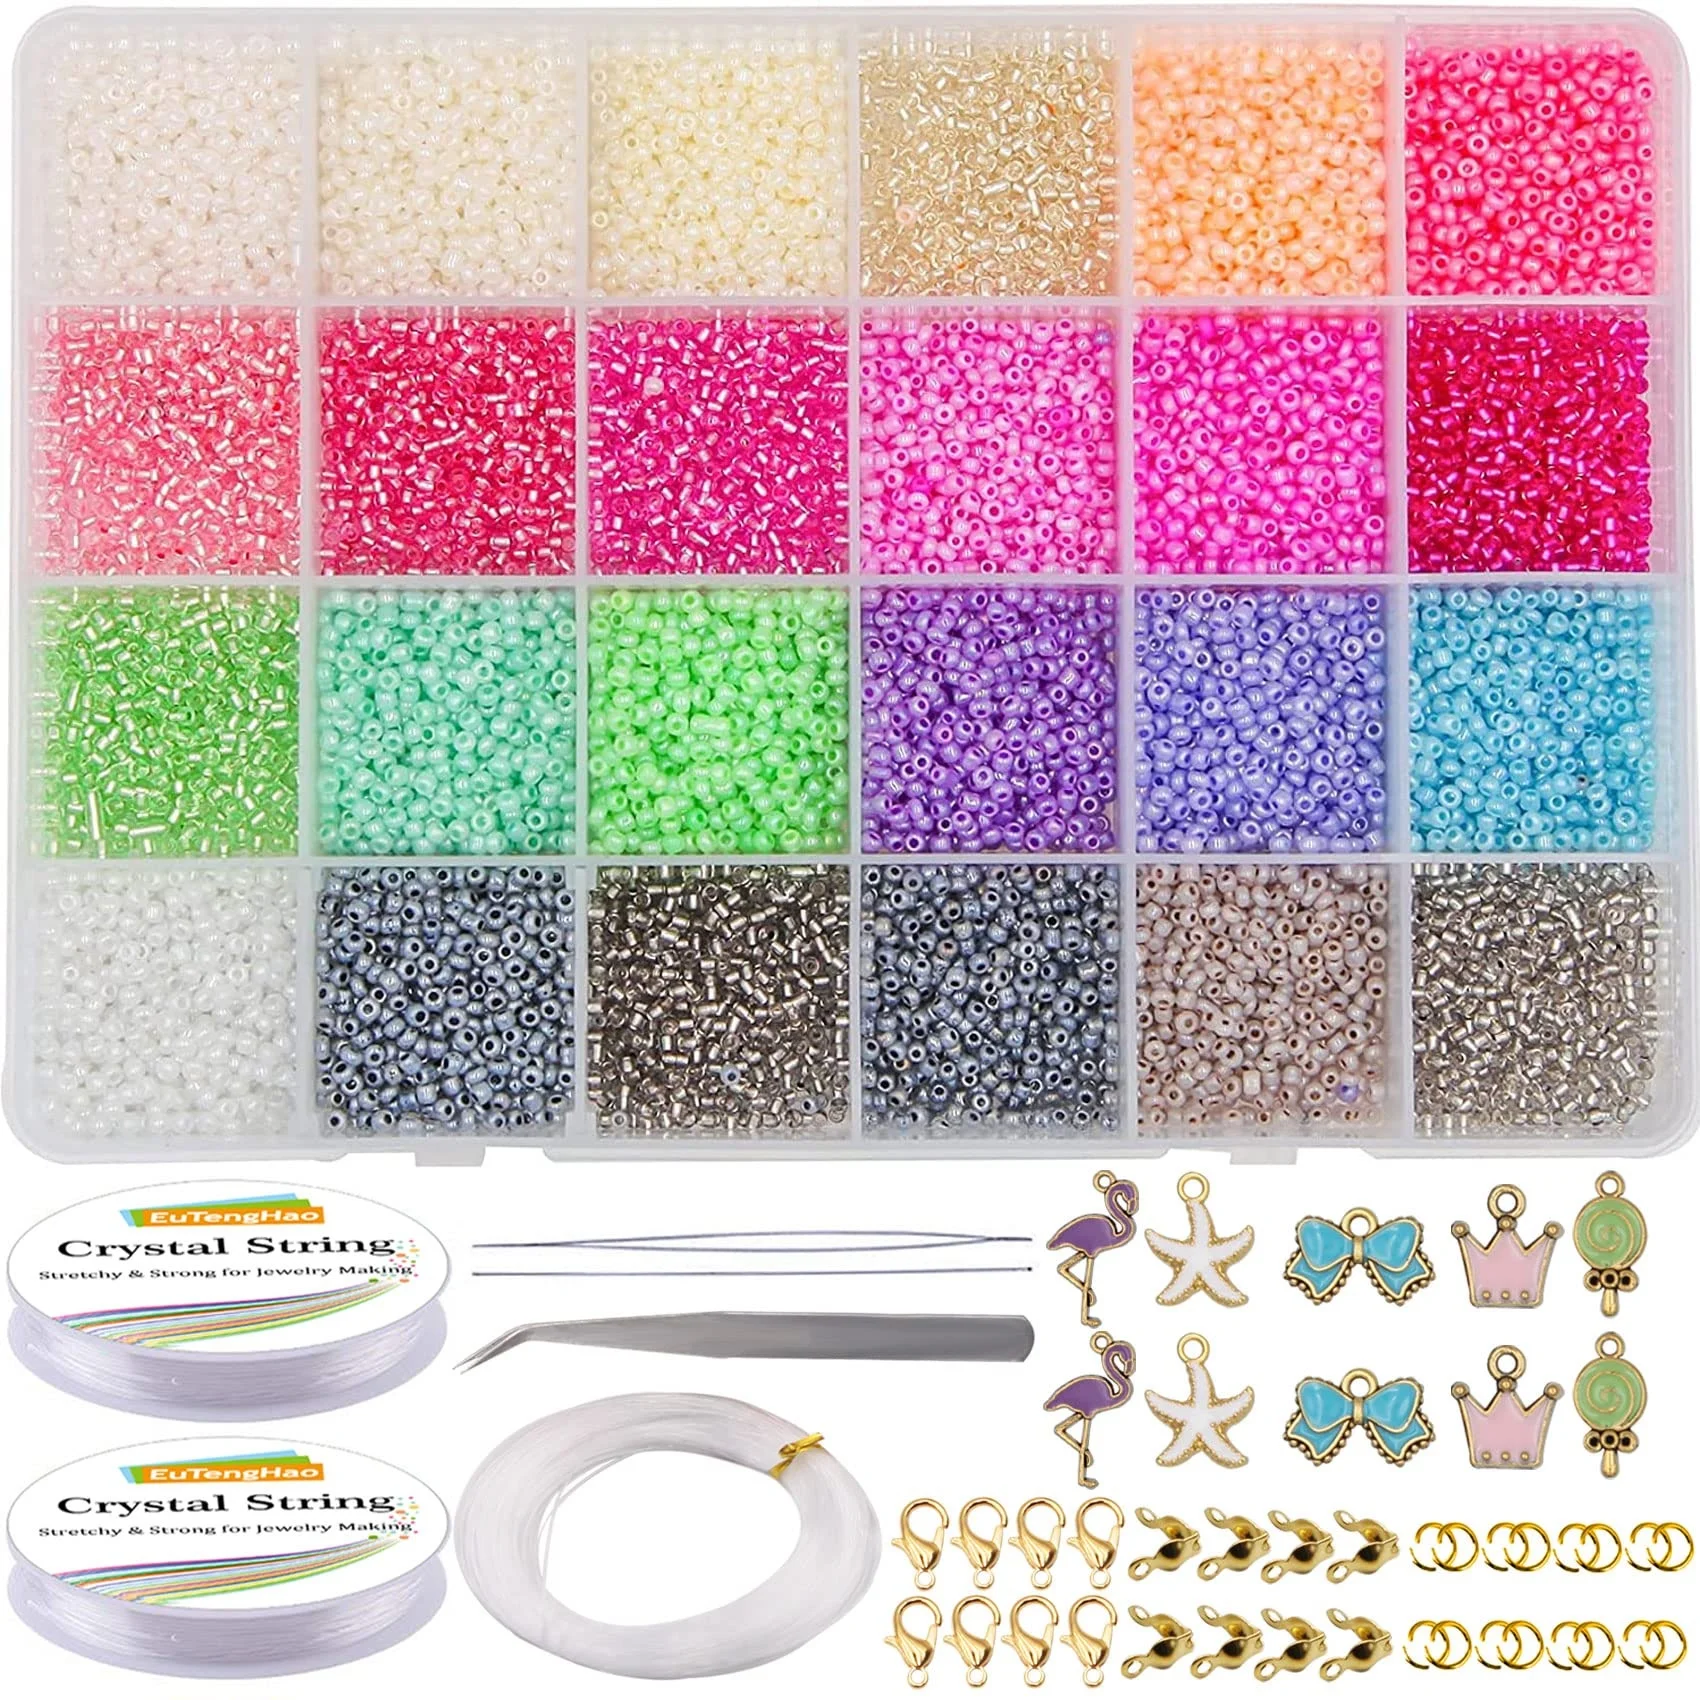 Beads - Waist Beads, Jewelry